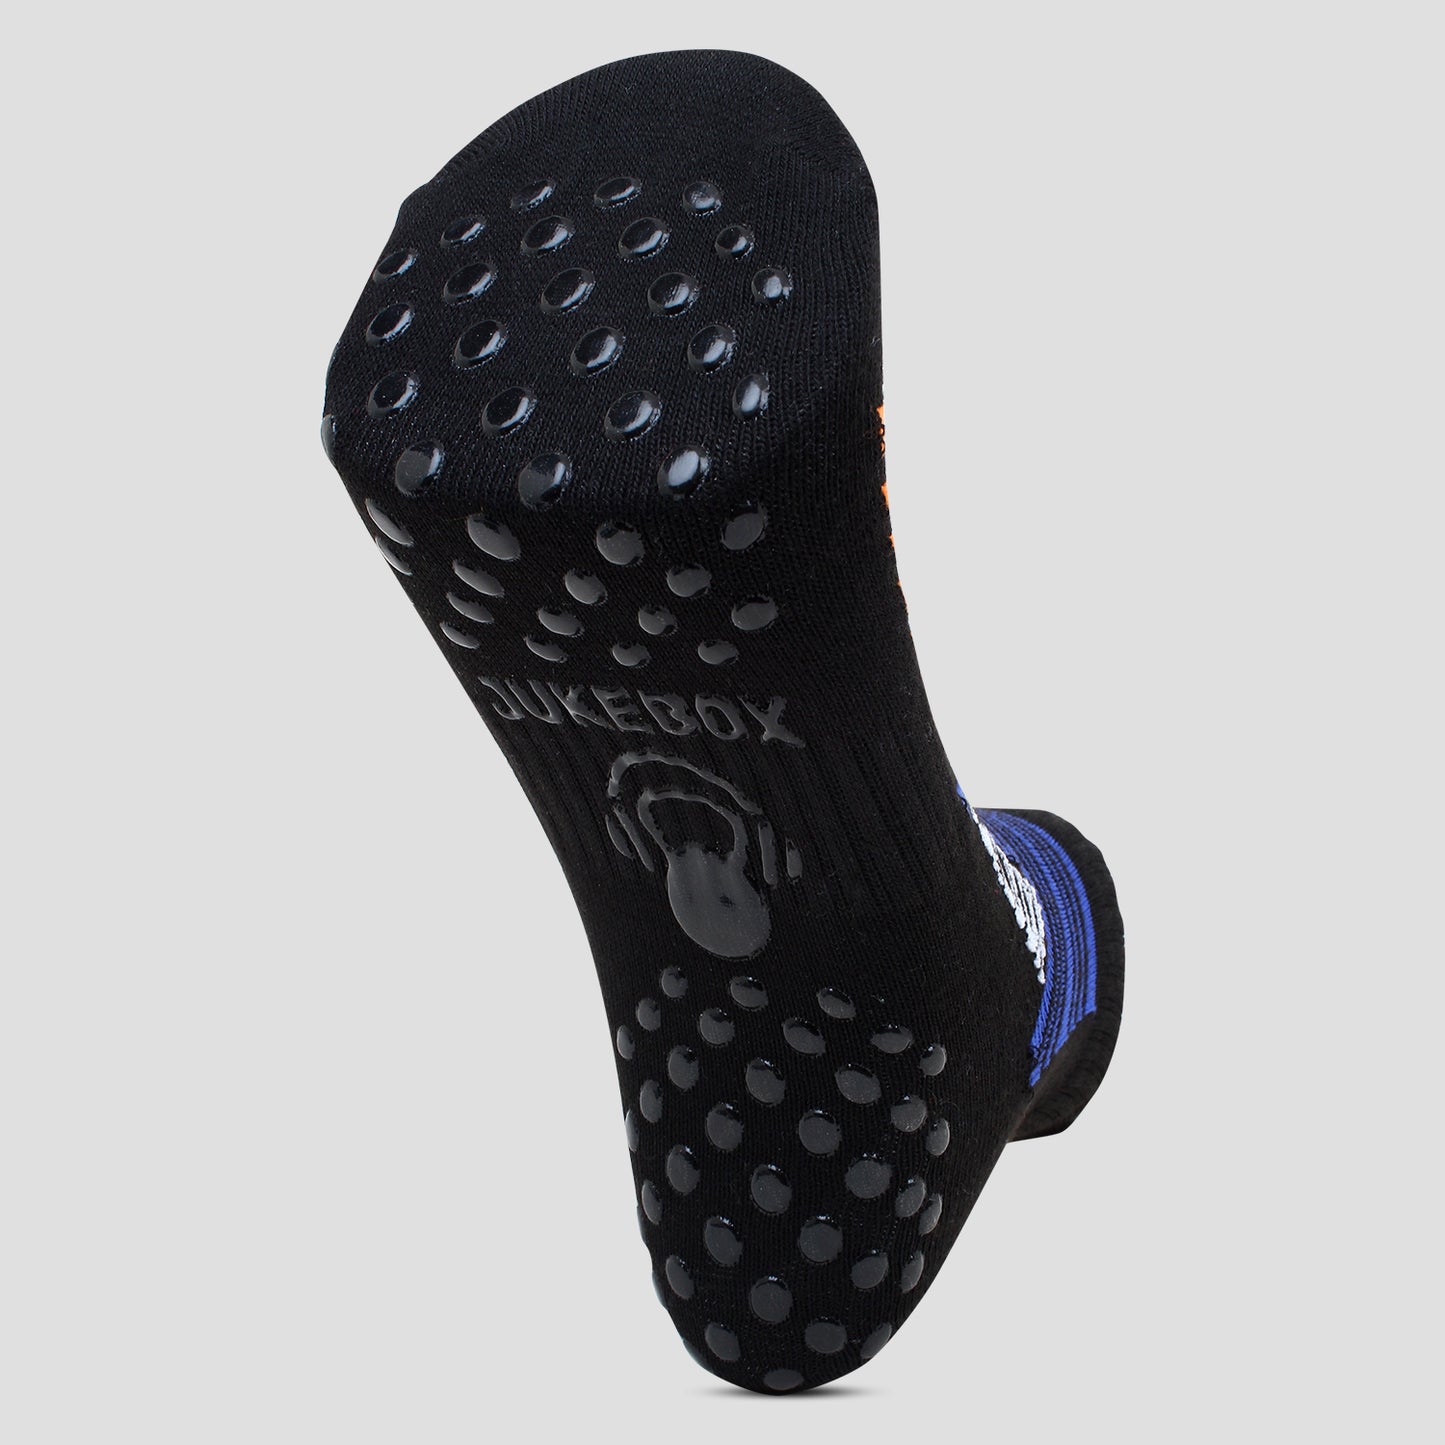 Grip	Motion Socks - Multi